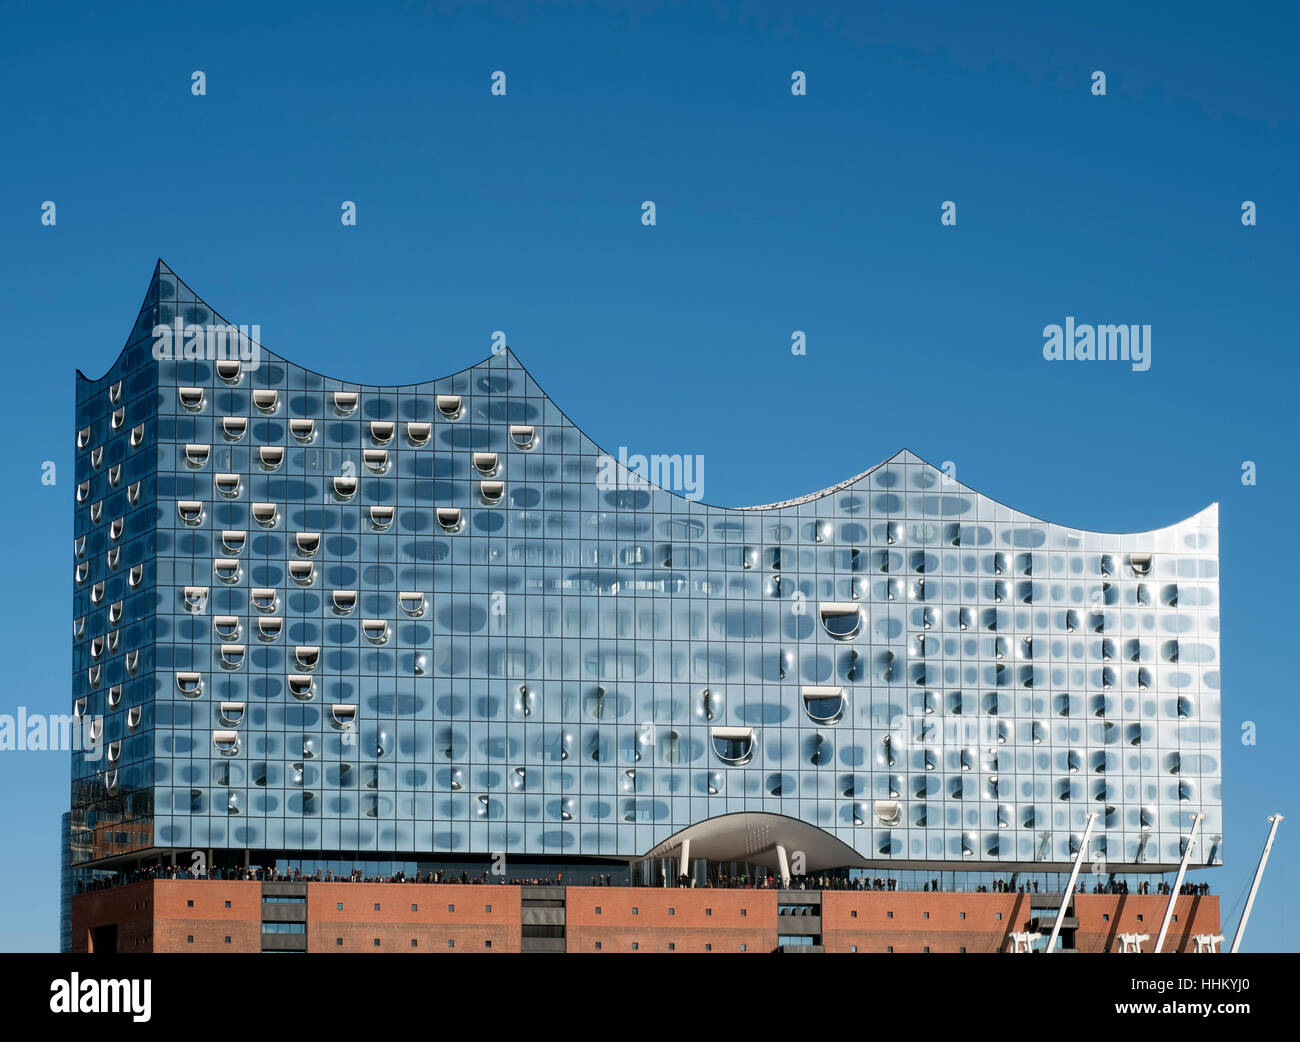 Elbphilharmonie di Amburgo, Germania; vista della nuova Elbphilharmonie opera house di Amburgo, Germania. Foto Stock